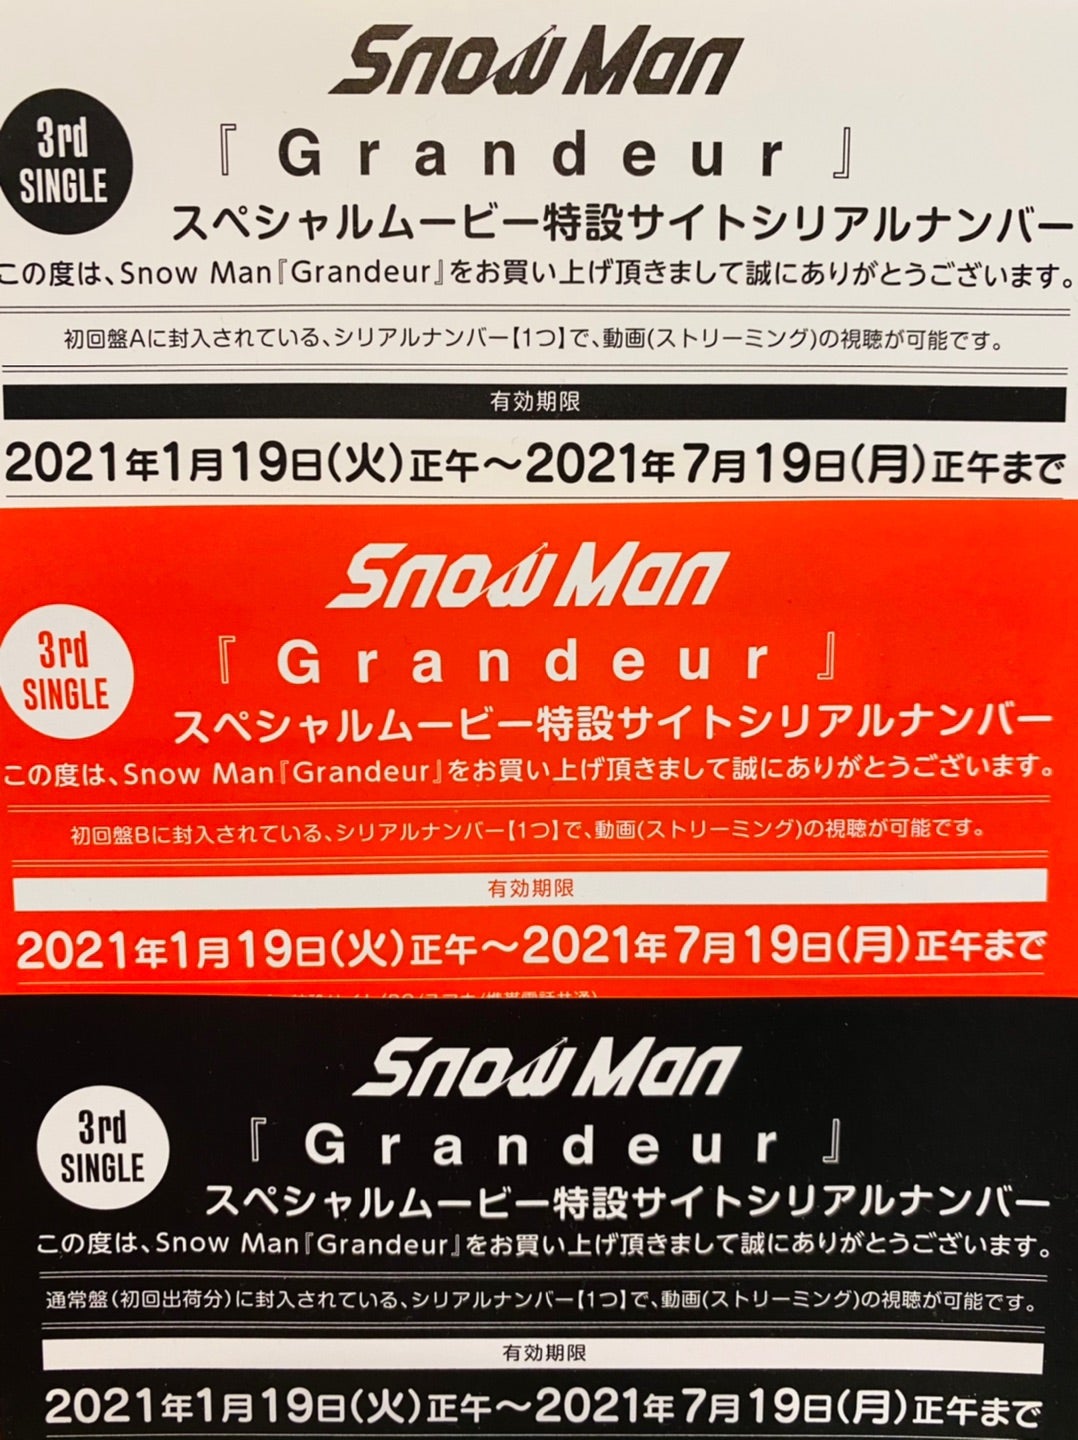 Snow Man 3rdシングル 初回出荷分CD封入 シリアルナンバーで 